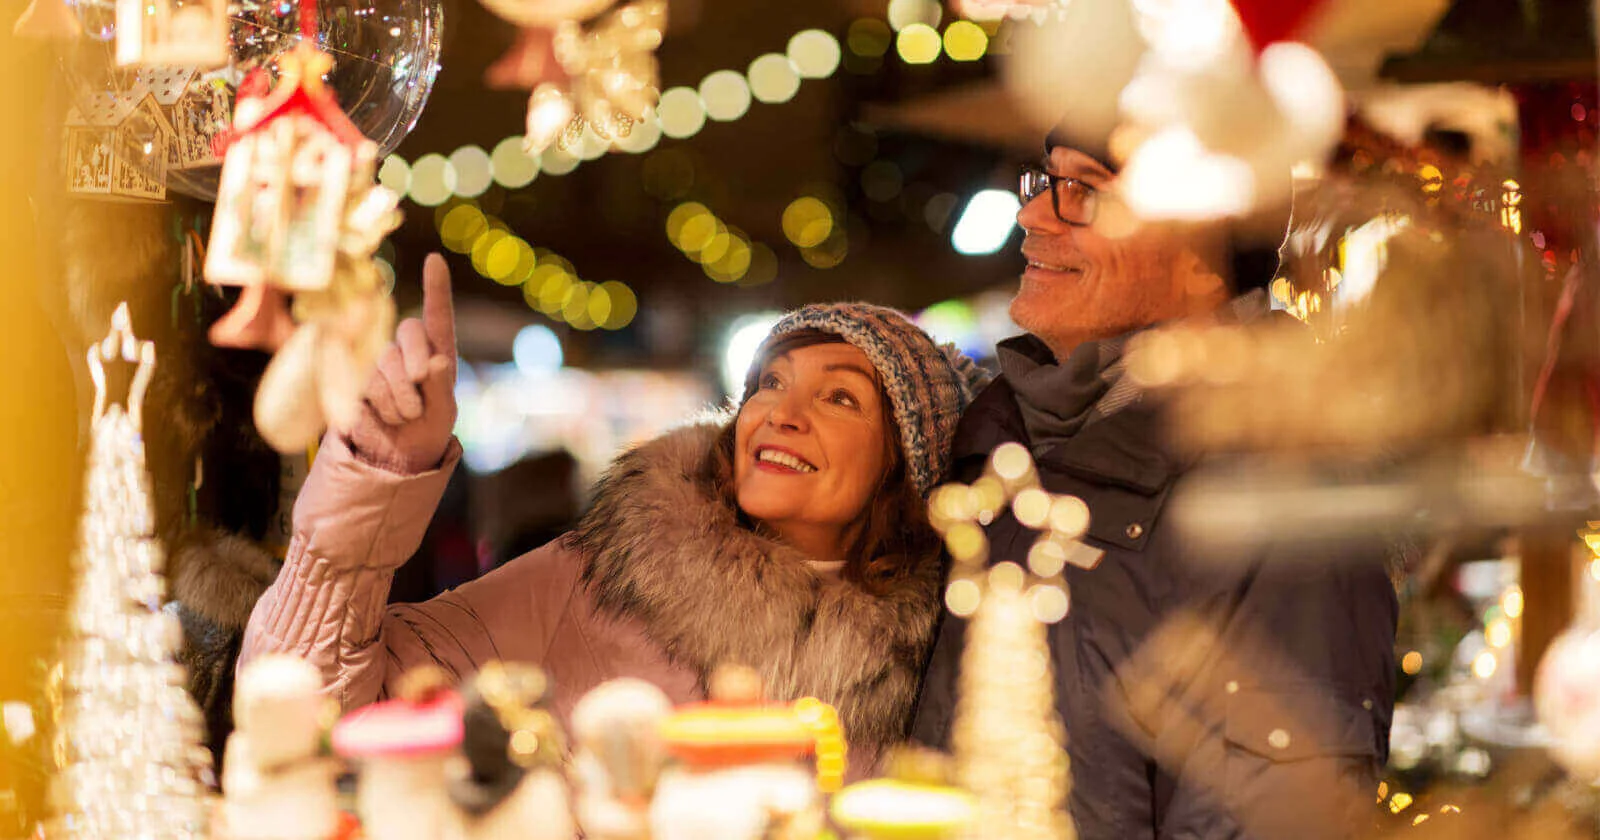 Explore Europe's Magical Christmas Markets this Holiday Season